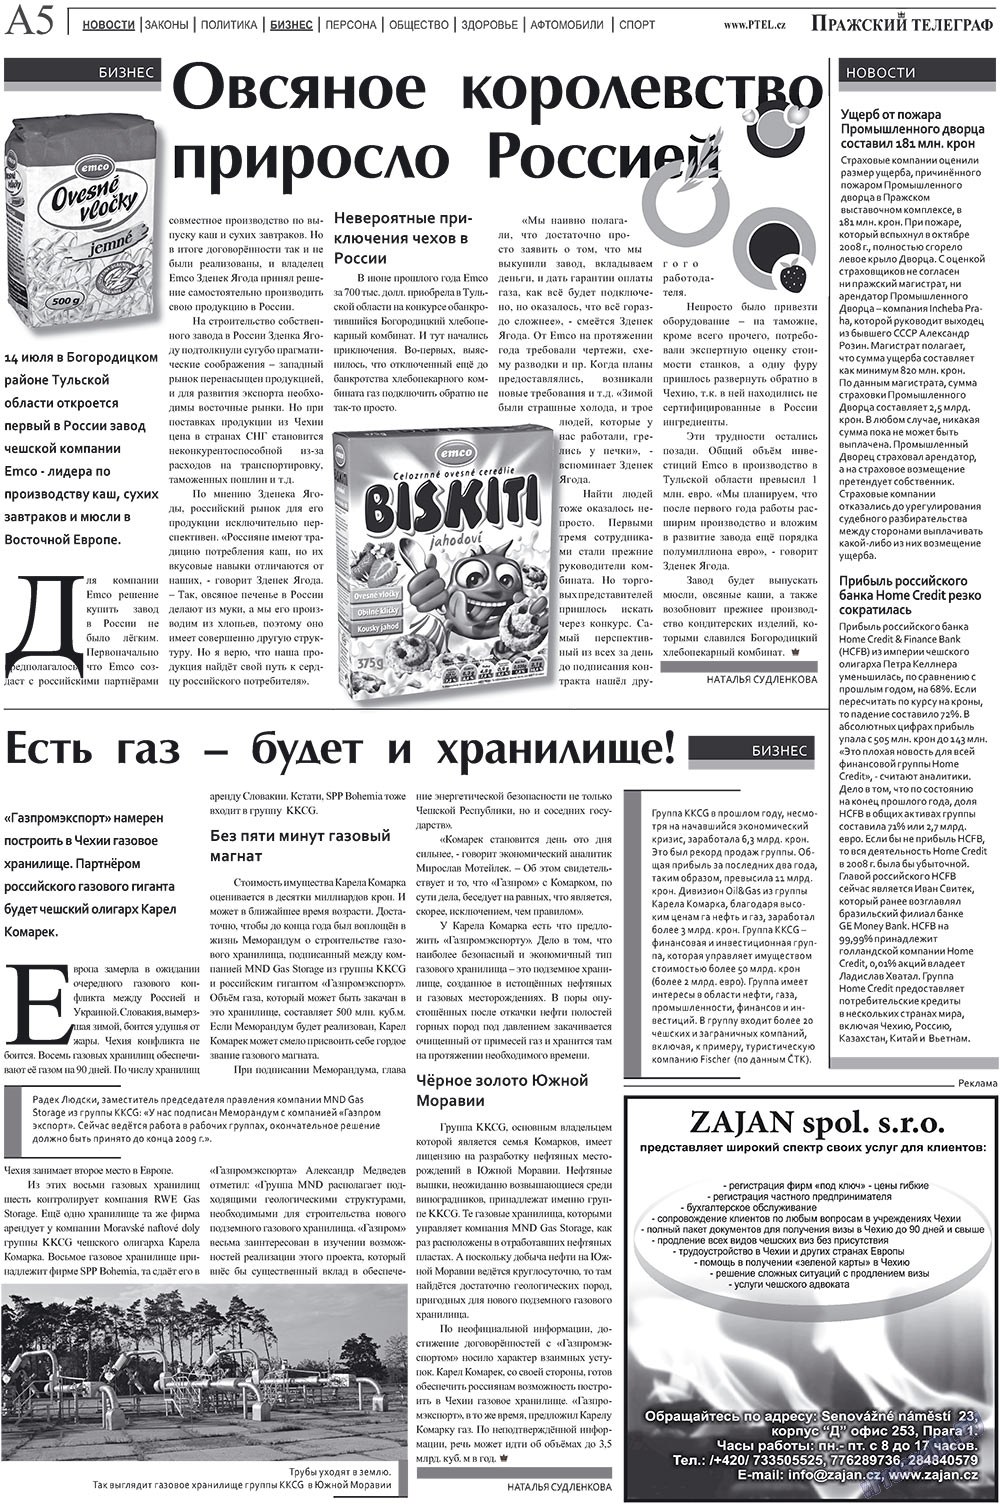 Пражский телеграф, газета. 2009 №10 стр.5